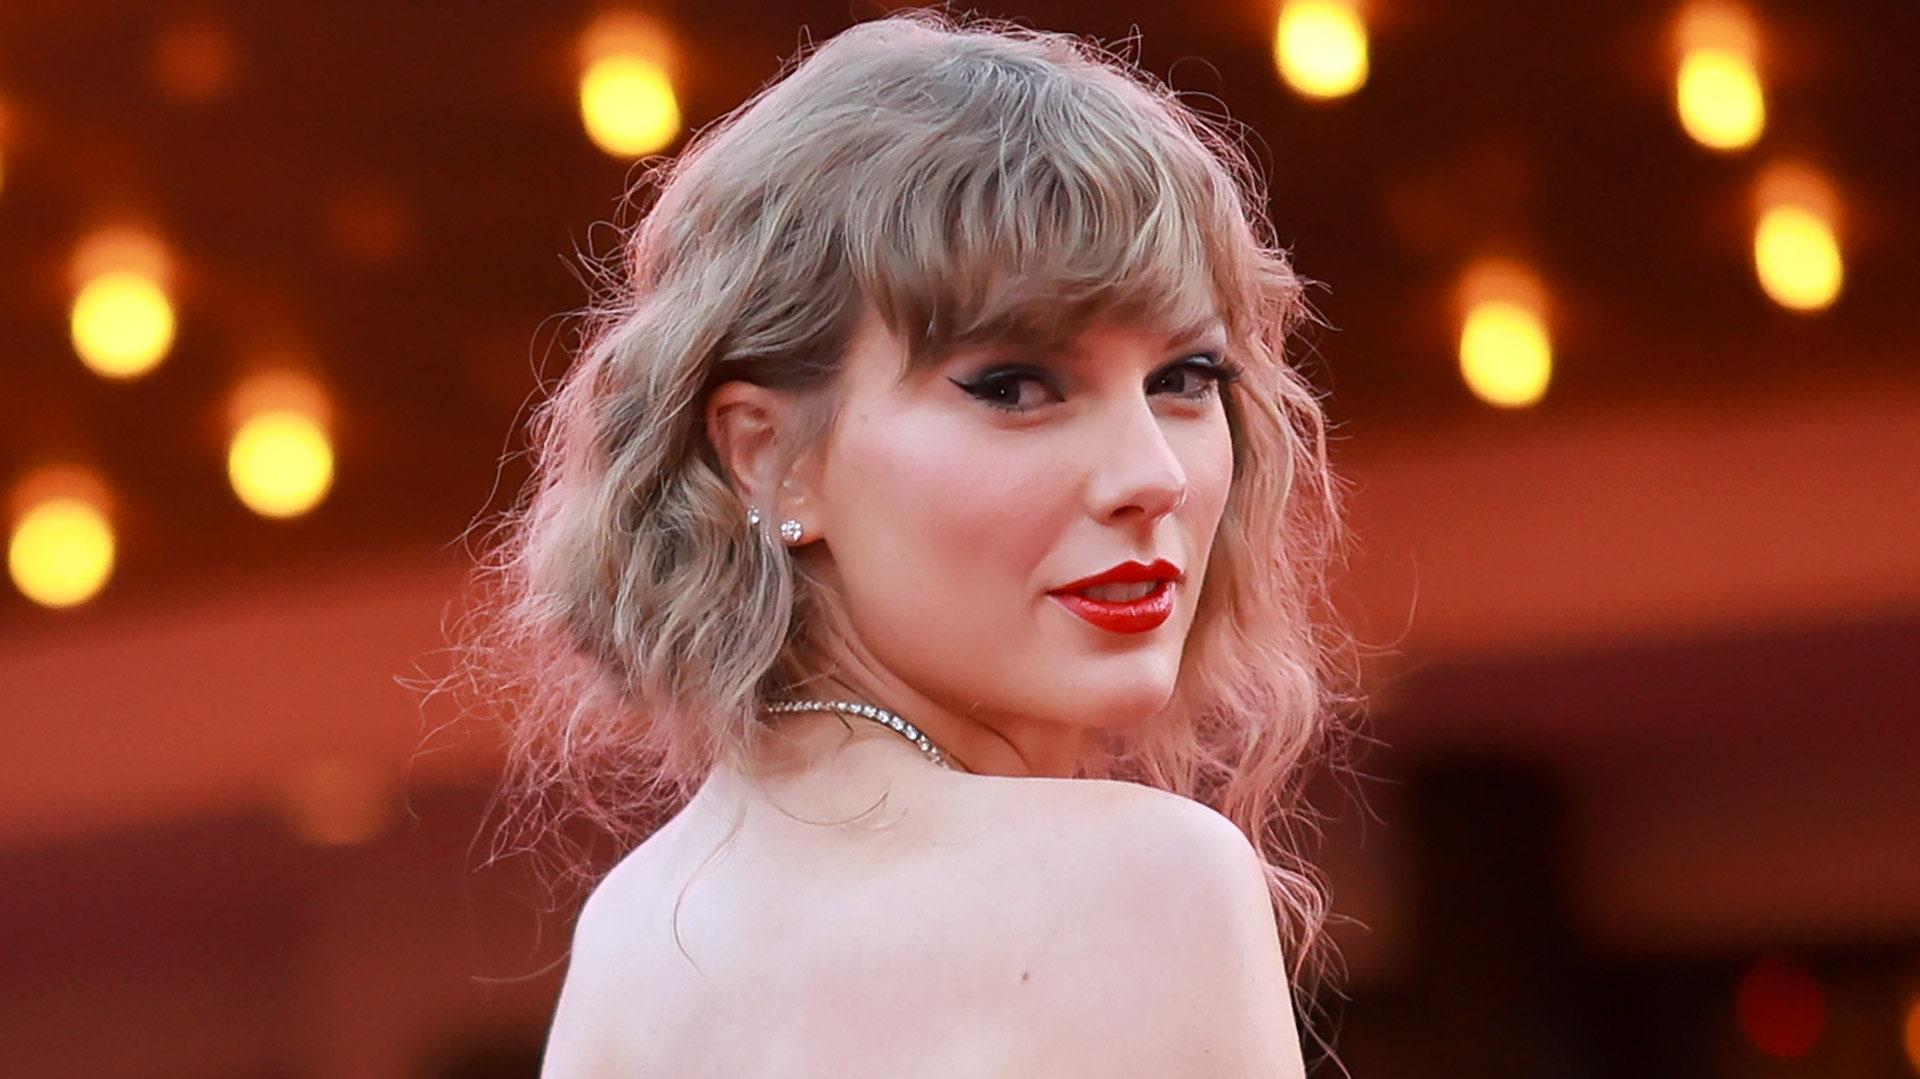 Taylor Swifts Eras Tour concert film has broken records before